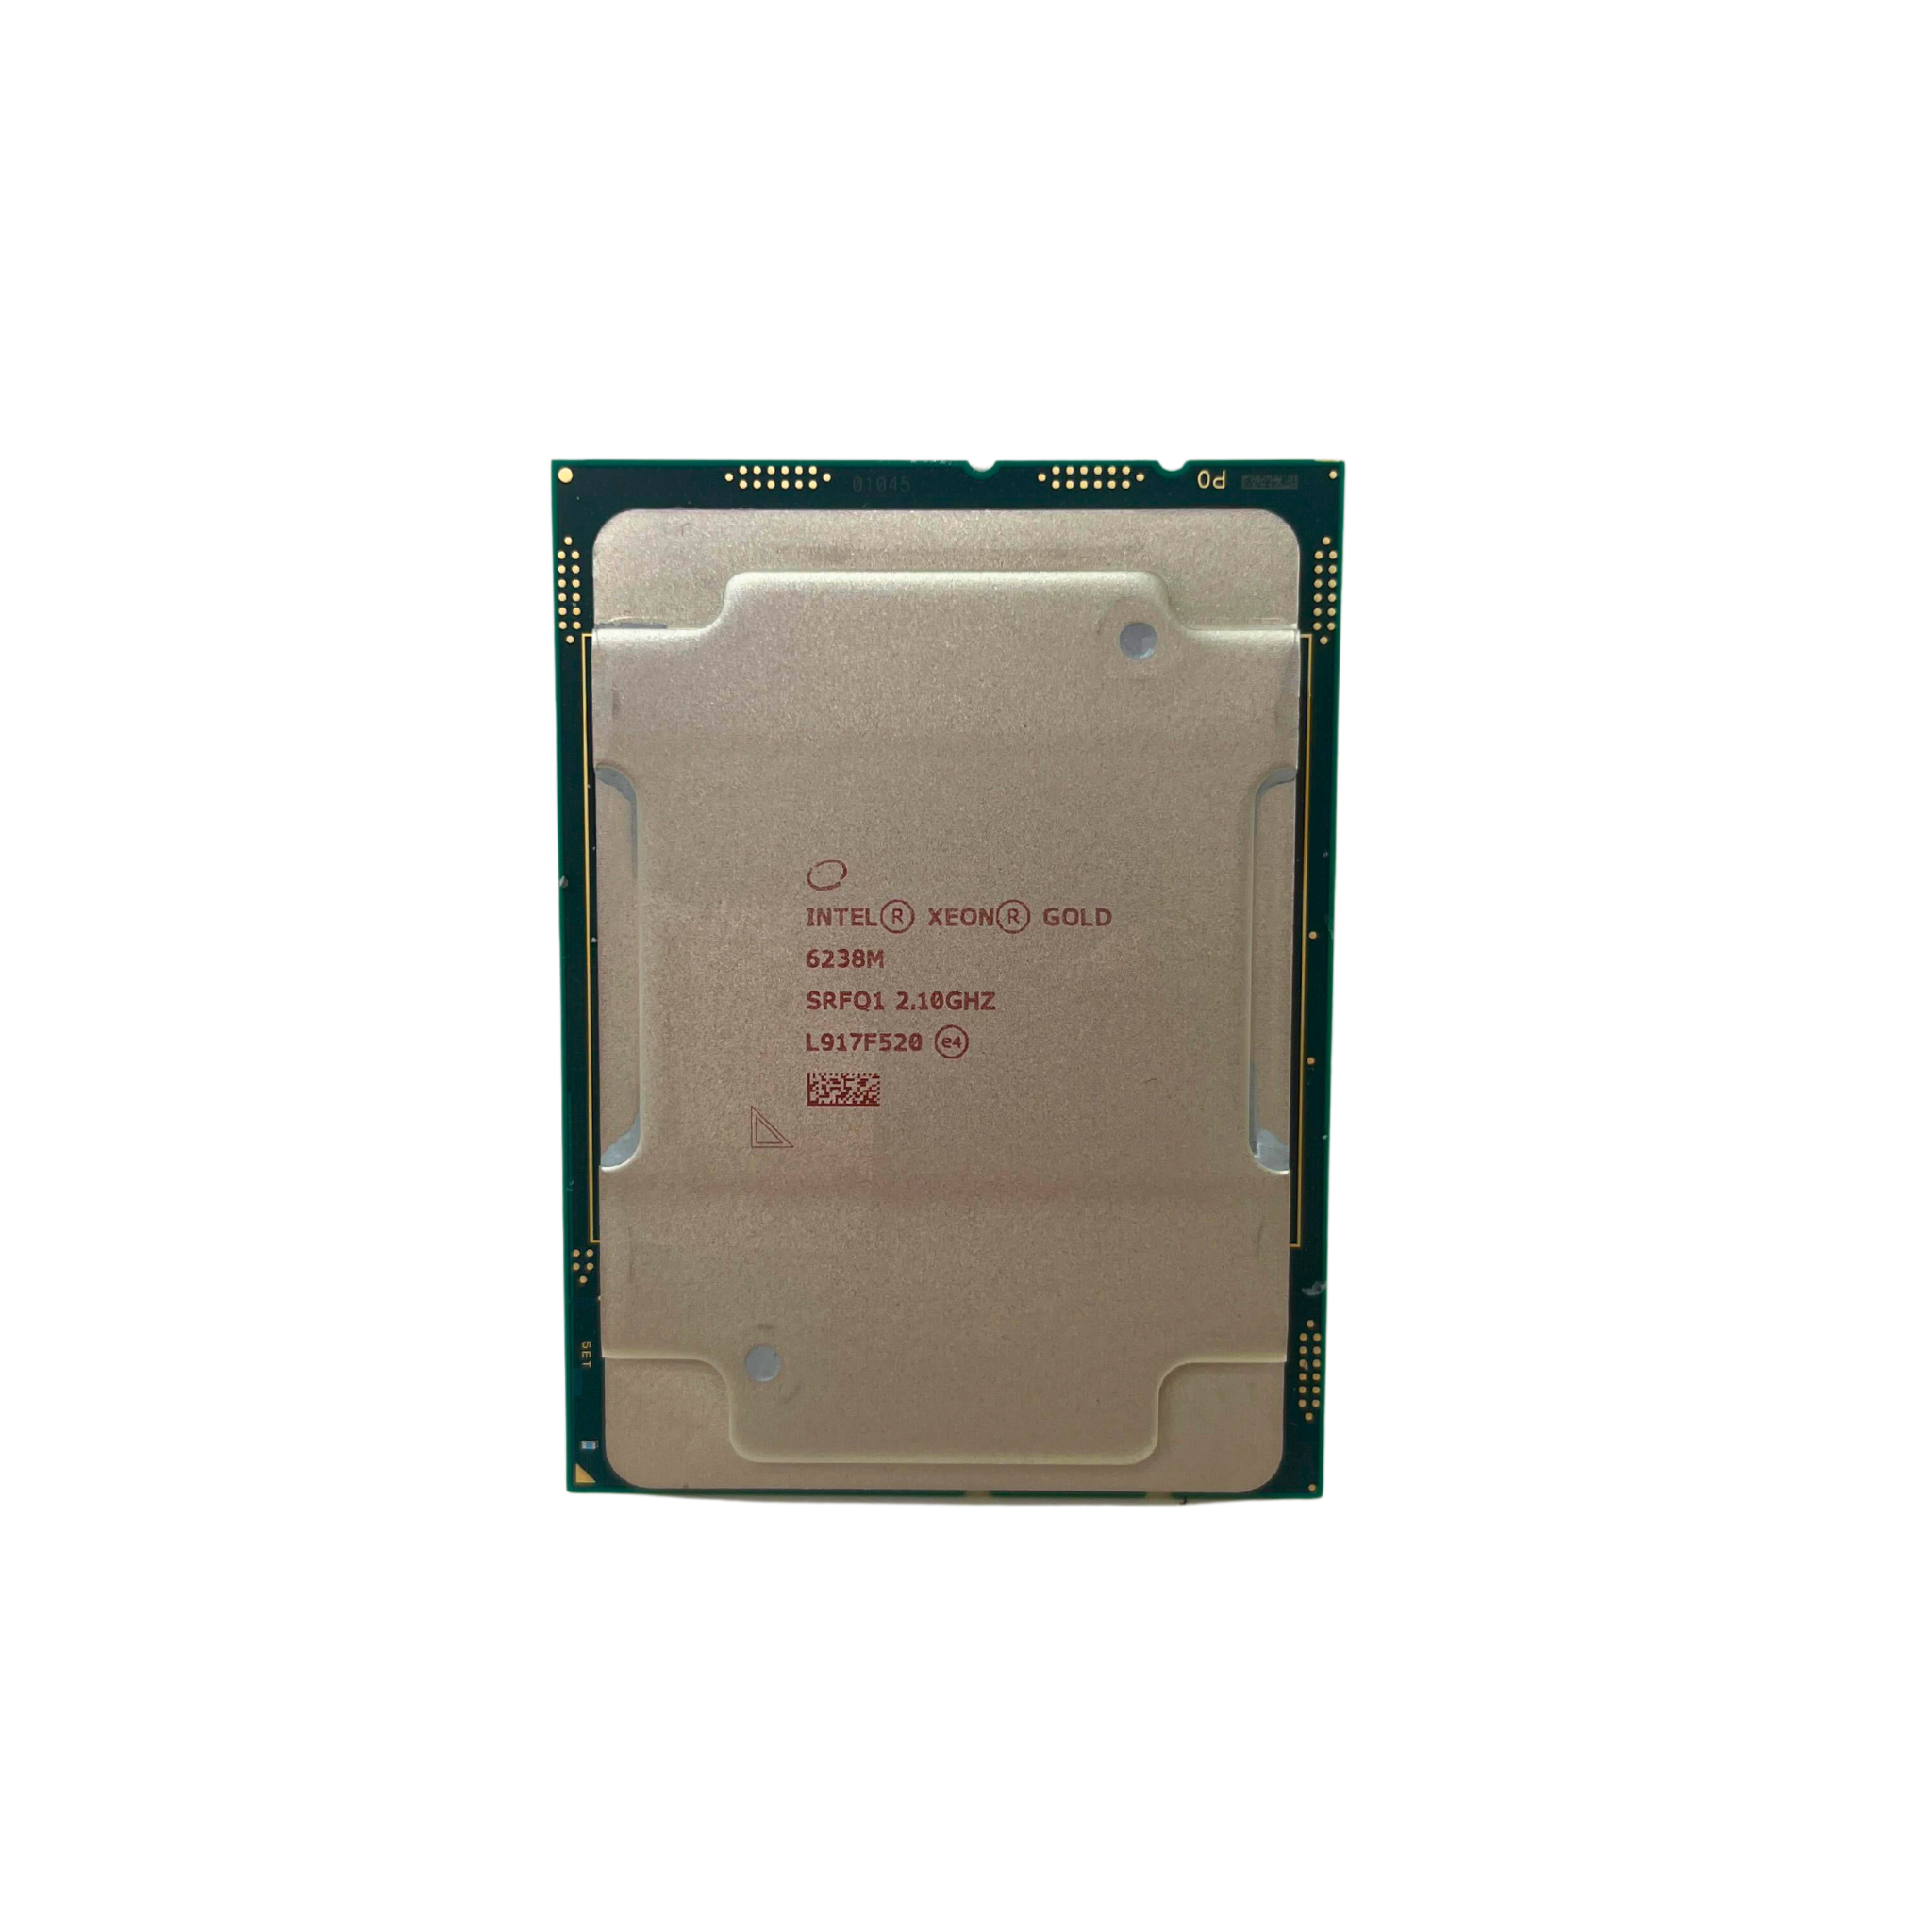 INTEL XEON GOLD 6238M 22 CORE 2.10GHZ CPU PROCESSOR (SRFQ1)